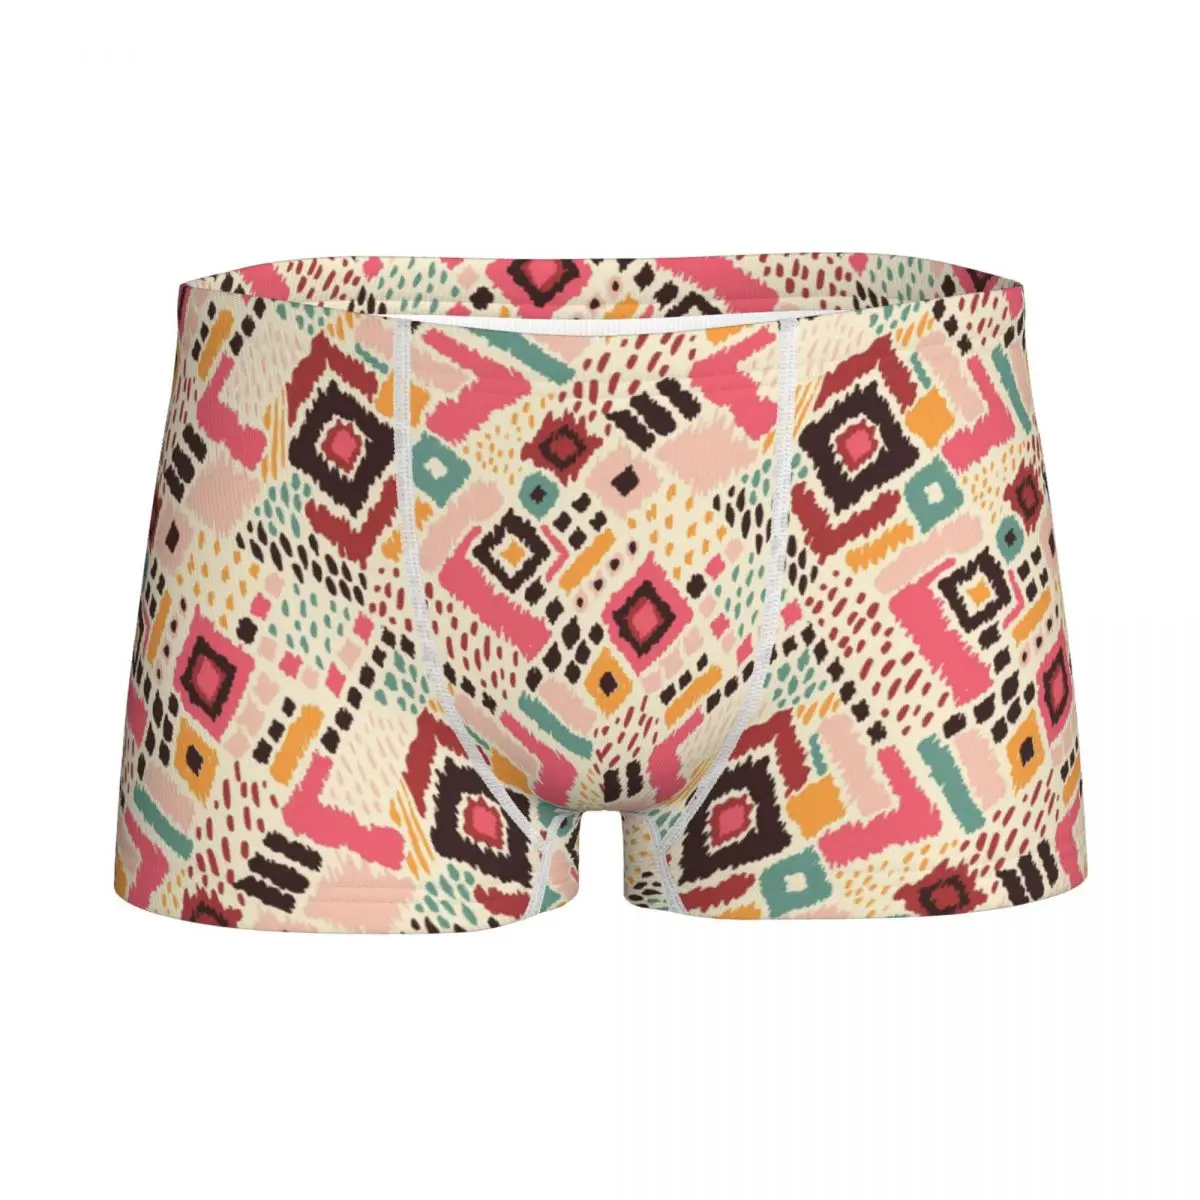 Boy Aztec Boho Boxers Cotton Young Underwear Ikat Geometric Folklore Children's Briefs Popularity Teenagers Underpants